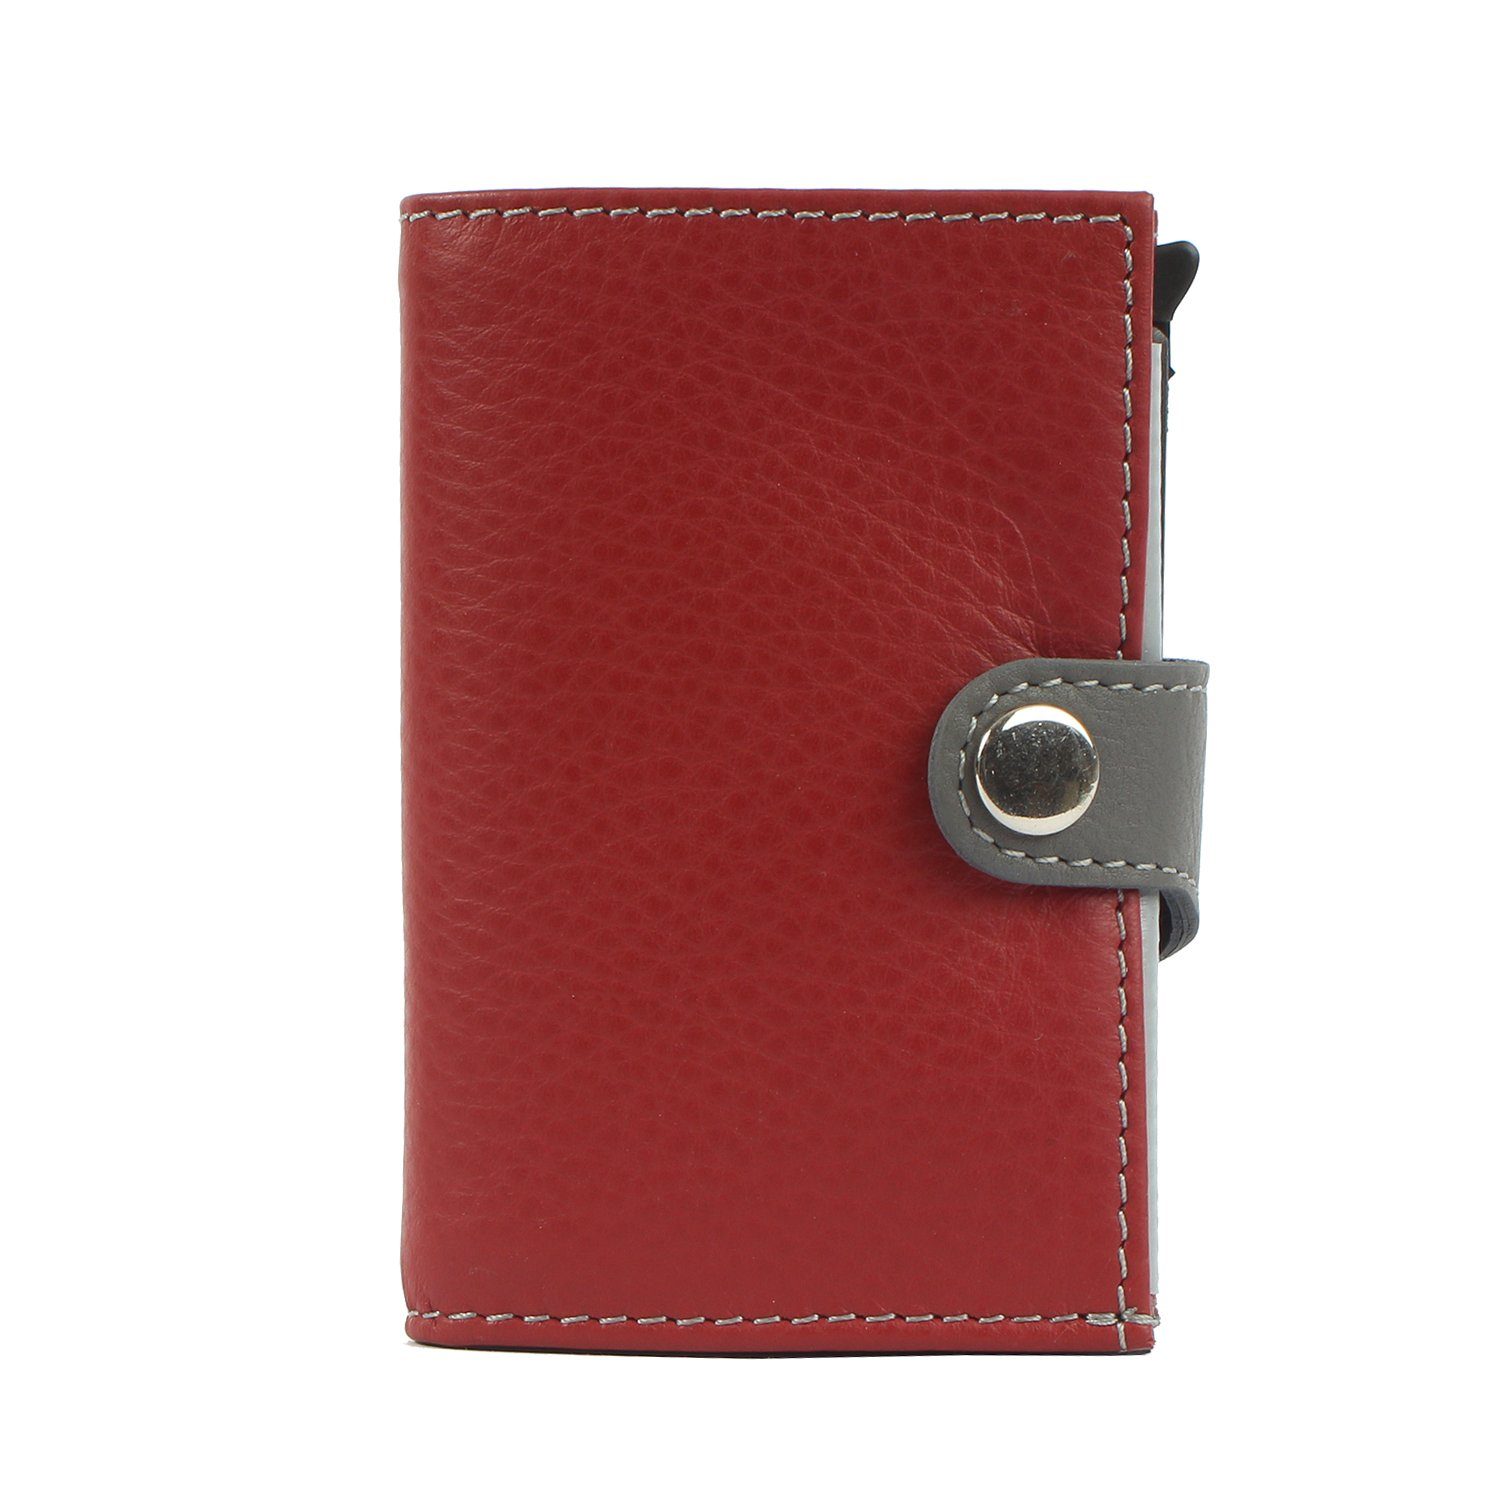 Margelisch Mini Geldbörse noonyu single leather, Kreditkartenbörse aus Upcycling Leder karminrot | Mini-Geldbörsen